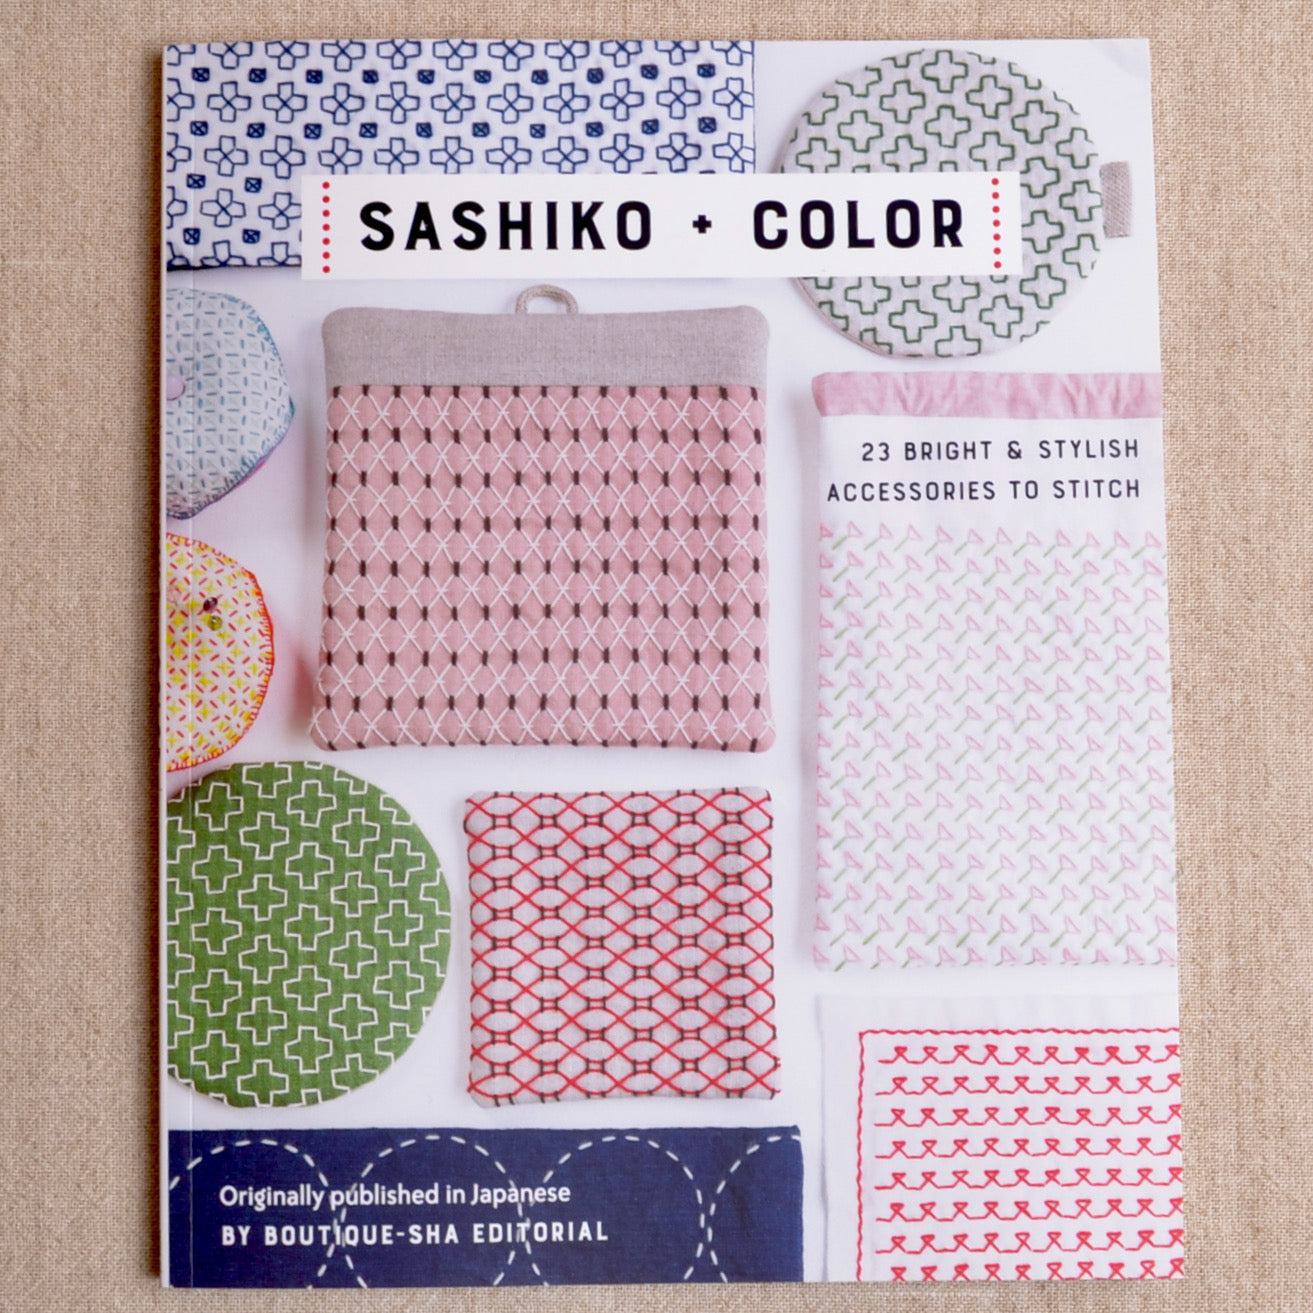 Sashiko book, Saskio + Color by Boutique-Sha Editorial